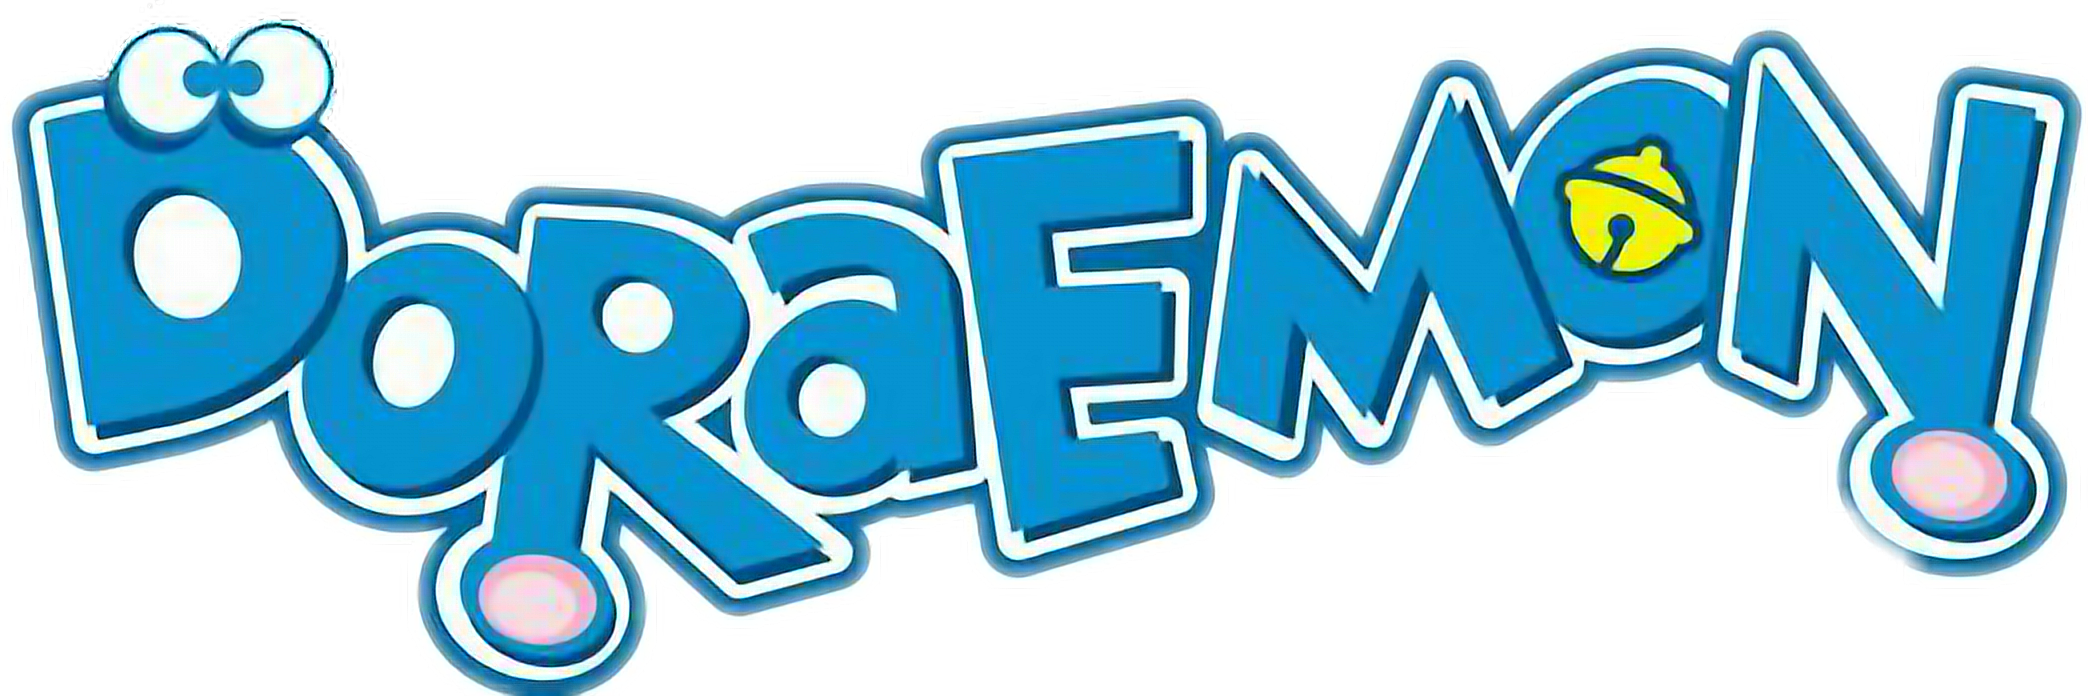 Doraemon logo PNG image